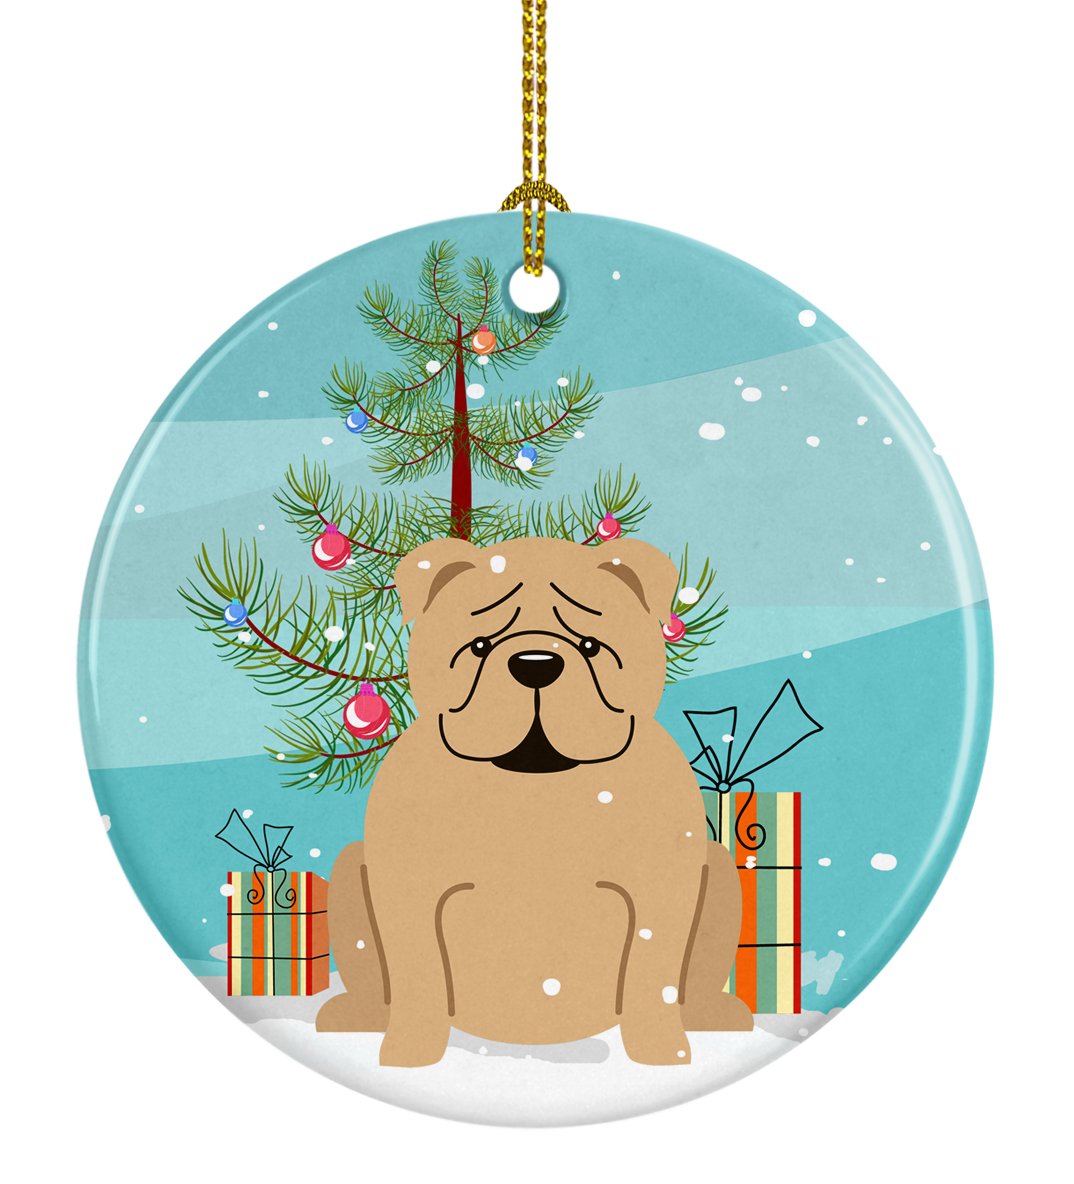 Merry Christmas Tree English Bulldog Fawn Ceramic Ornament BB4249CO1 by Caroline's Treasures